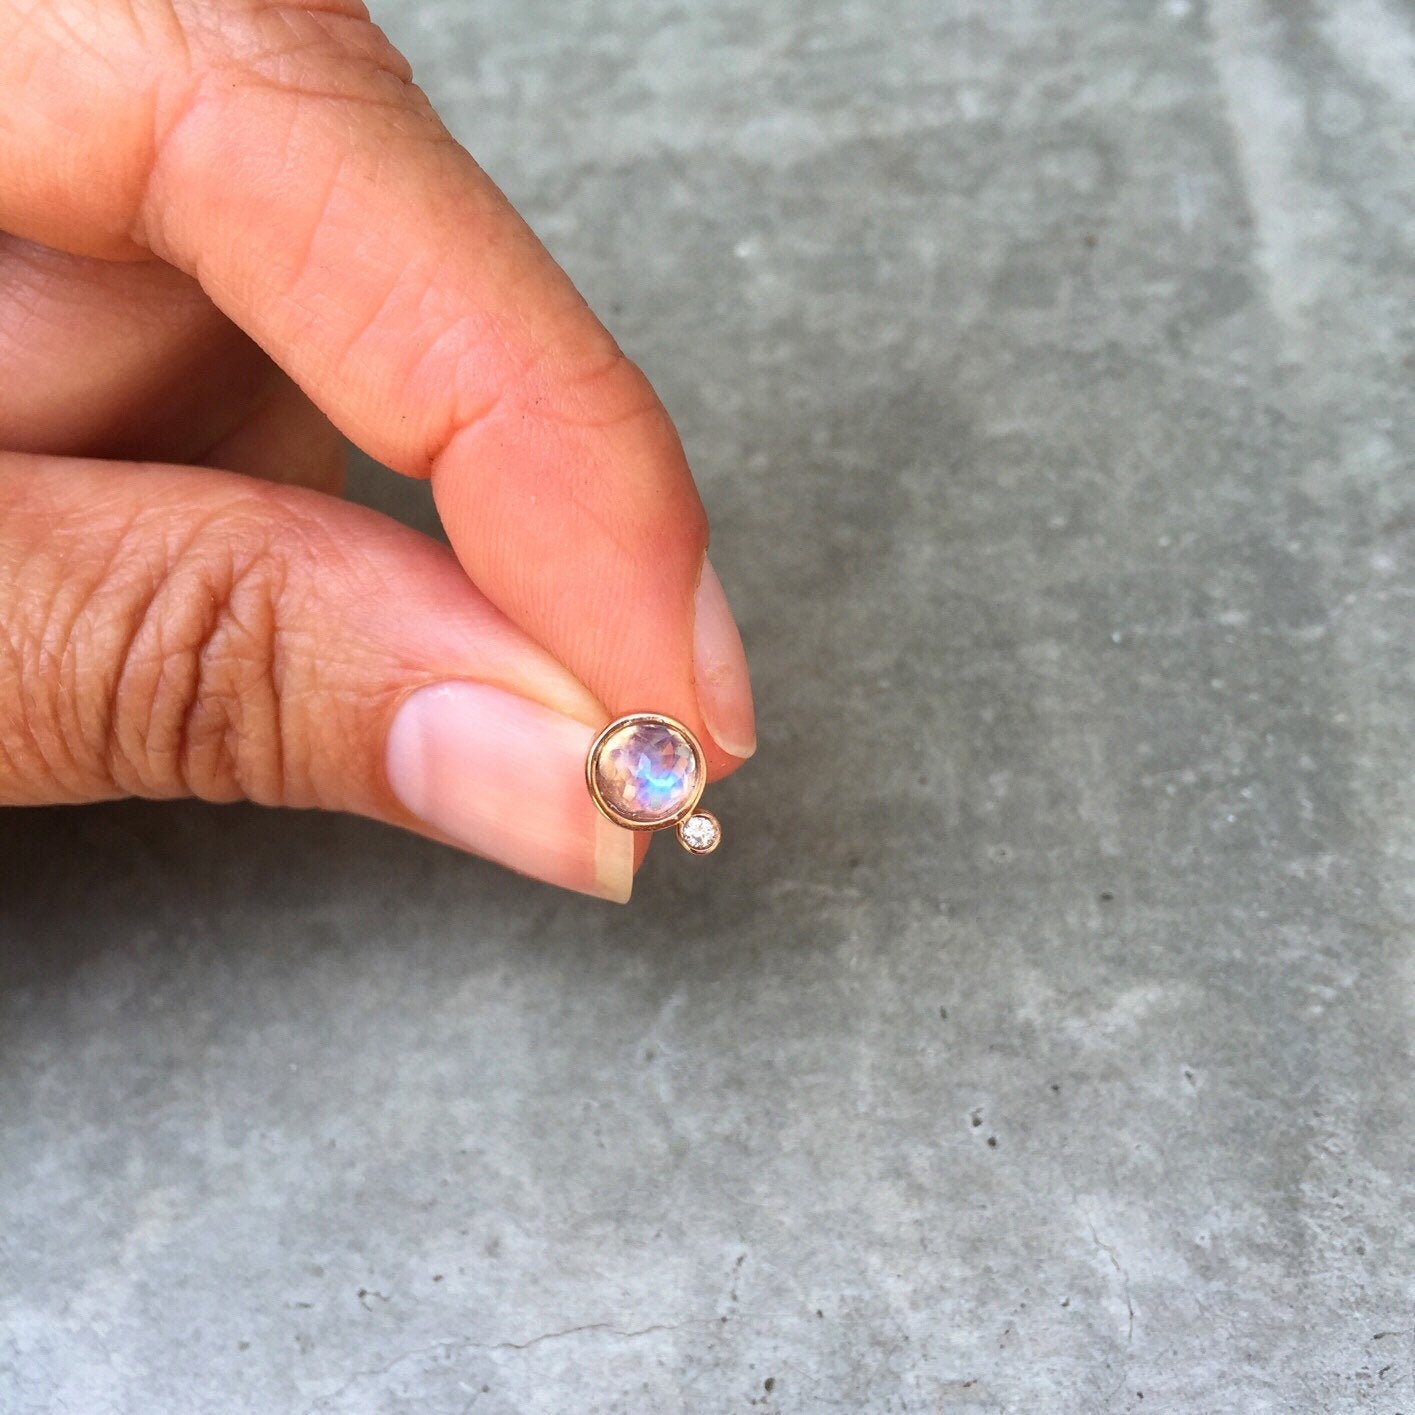 moonbeam moonstone diamond stud earrings in rose gold, scale next to hand